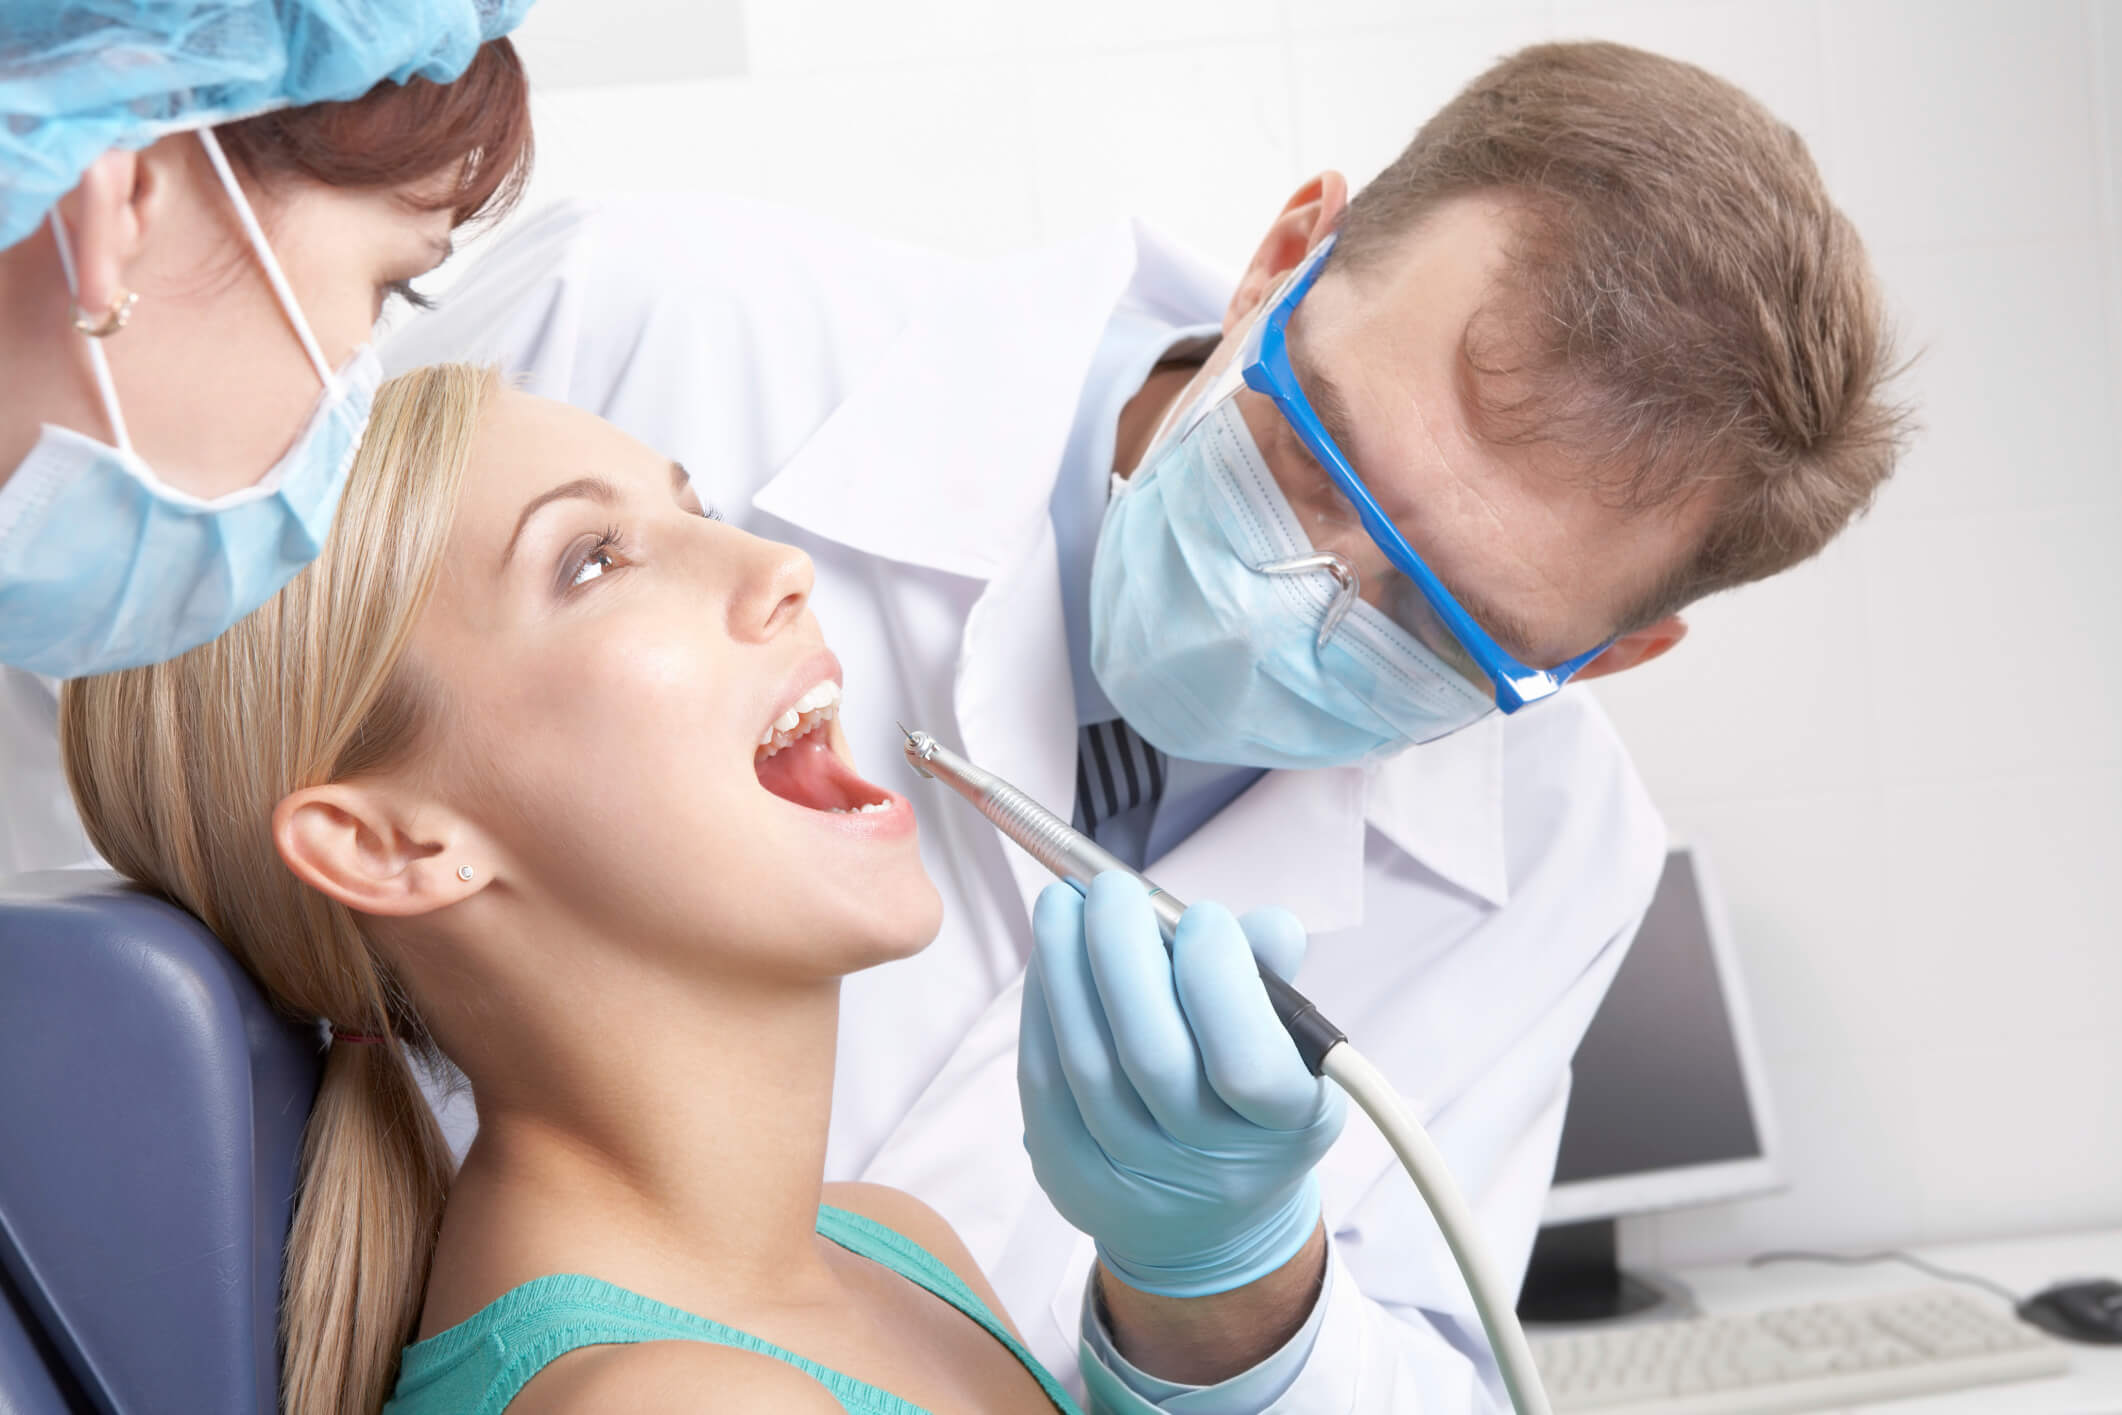 Clínica Dental Barcelona - Dentes